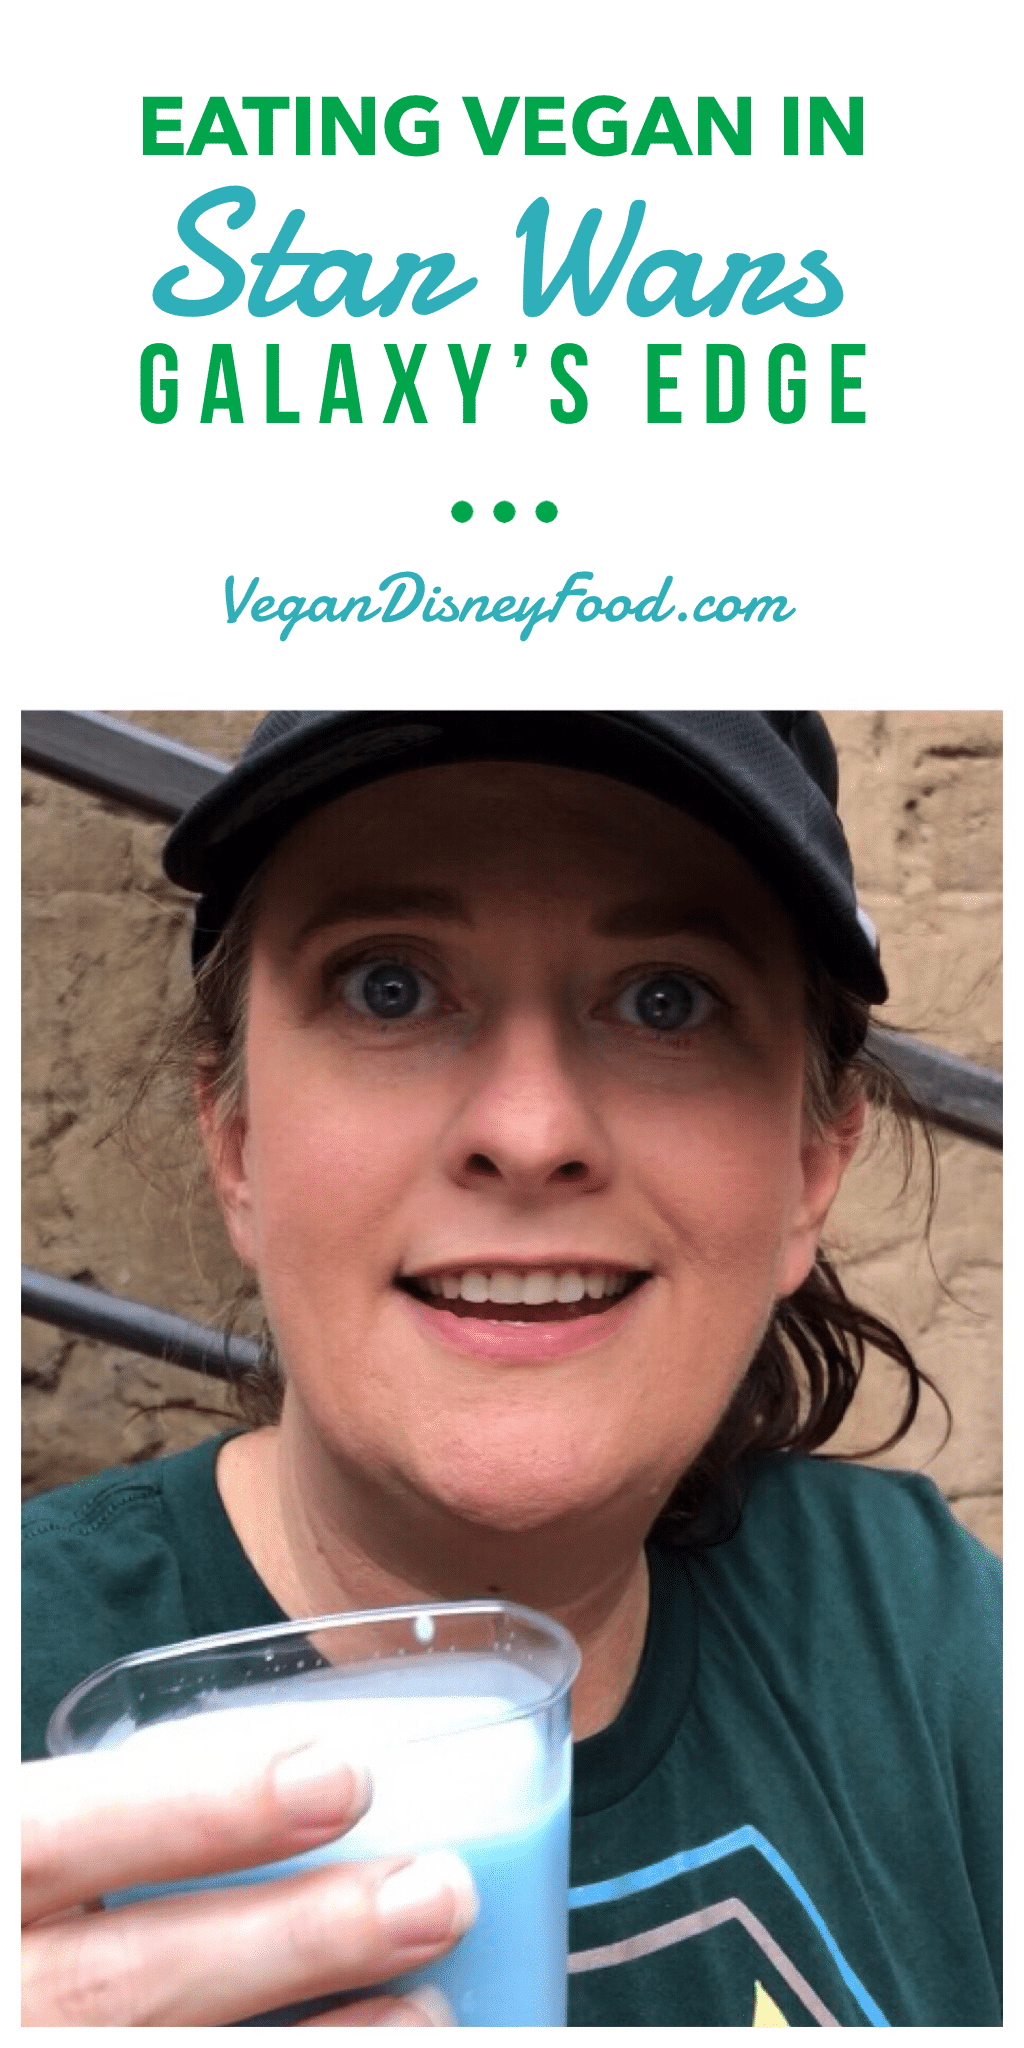 Vegan Disney Food Video – Vegan Options at Star Wars Galaxy’s Edge